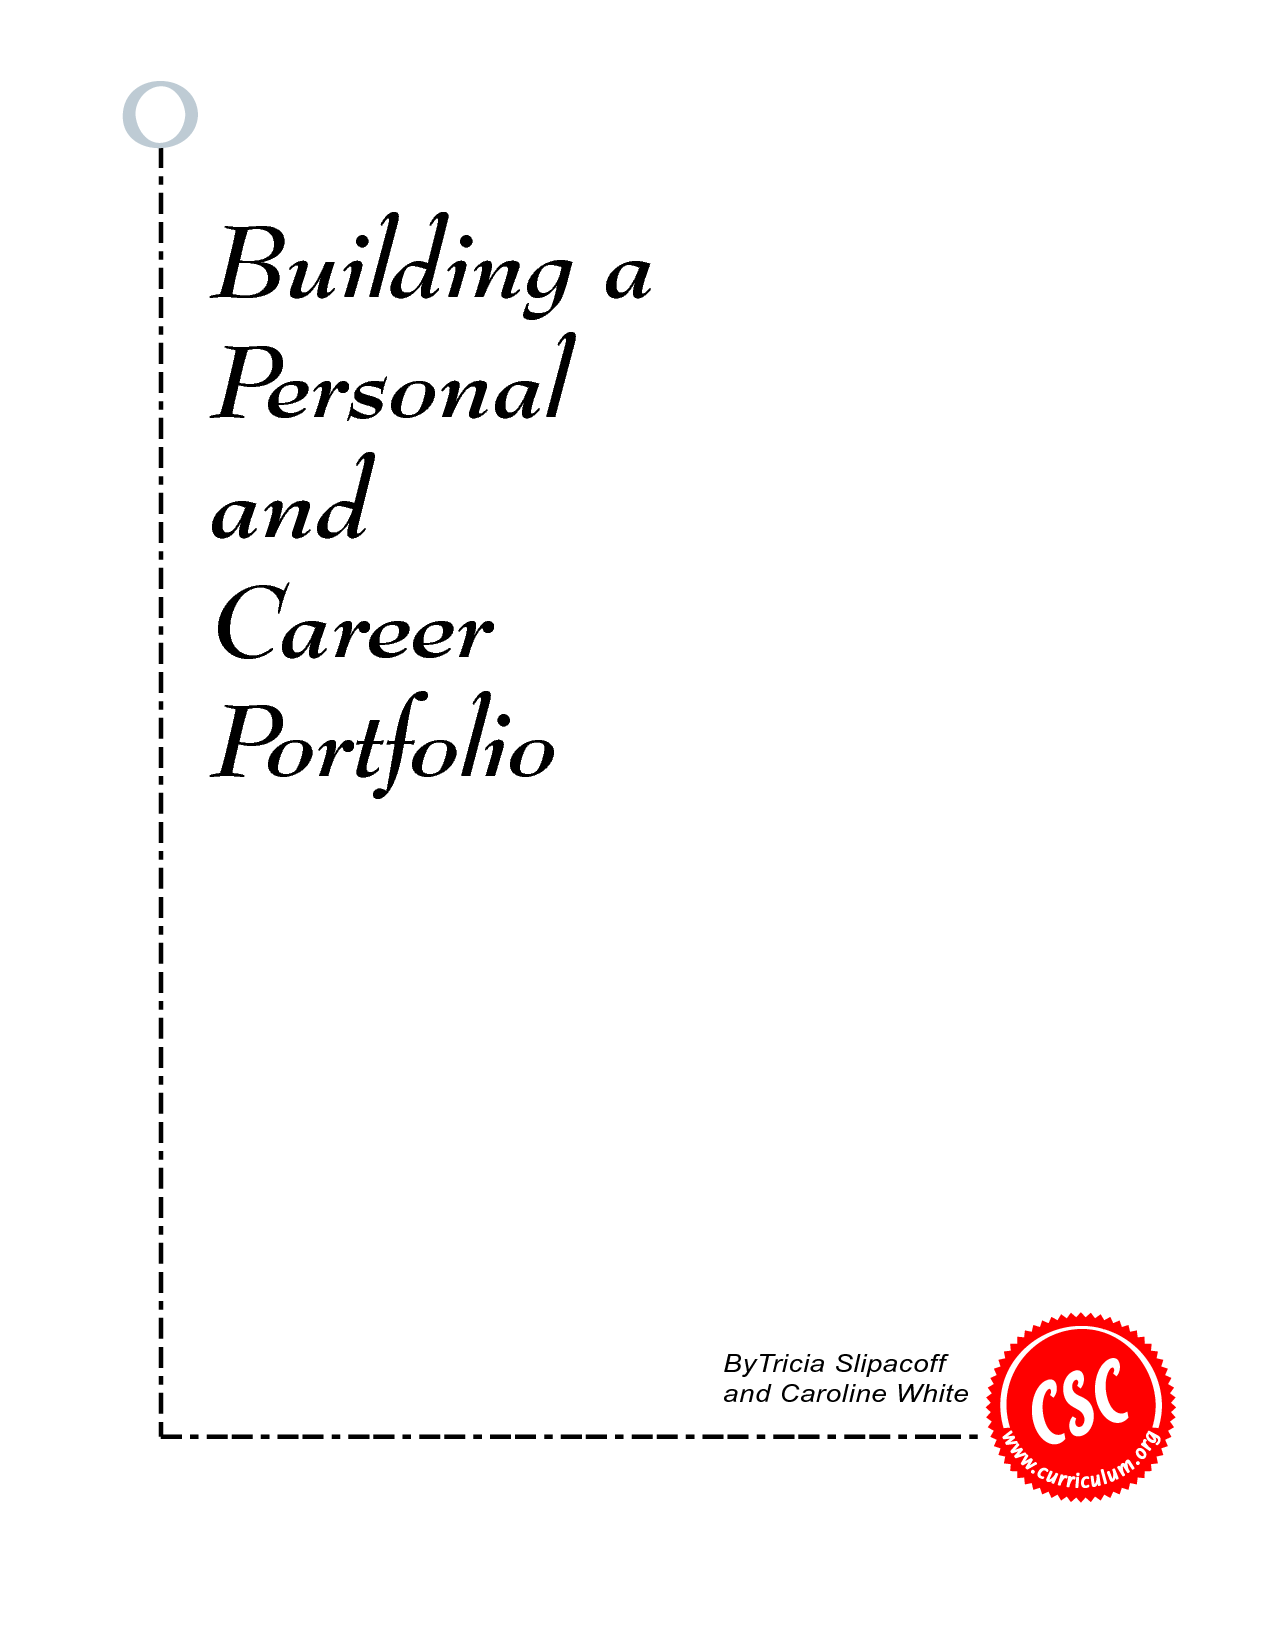 Career Portfolio Cover Page Template